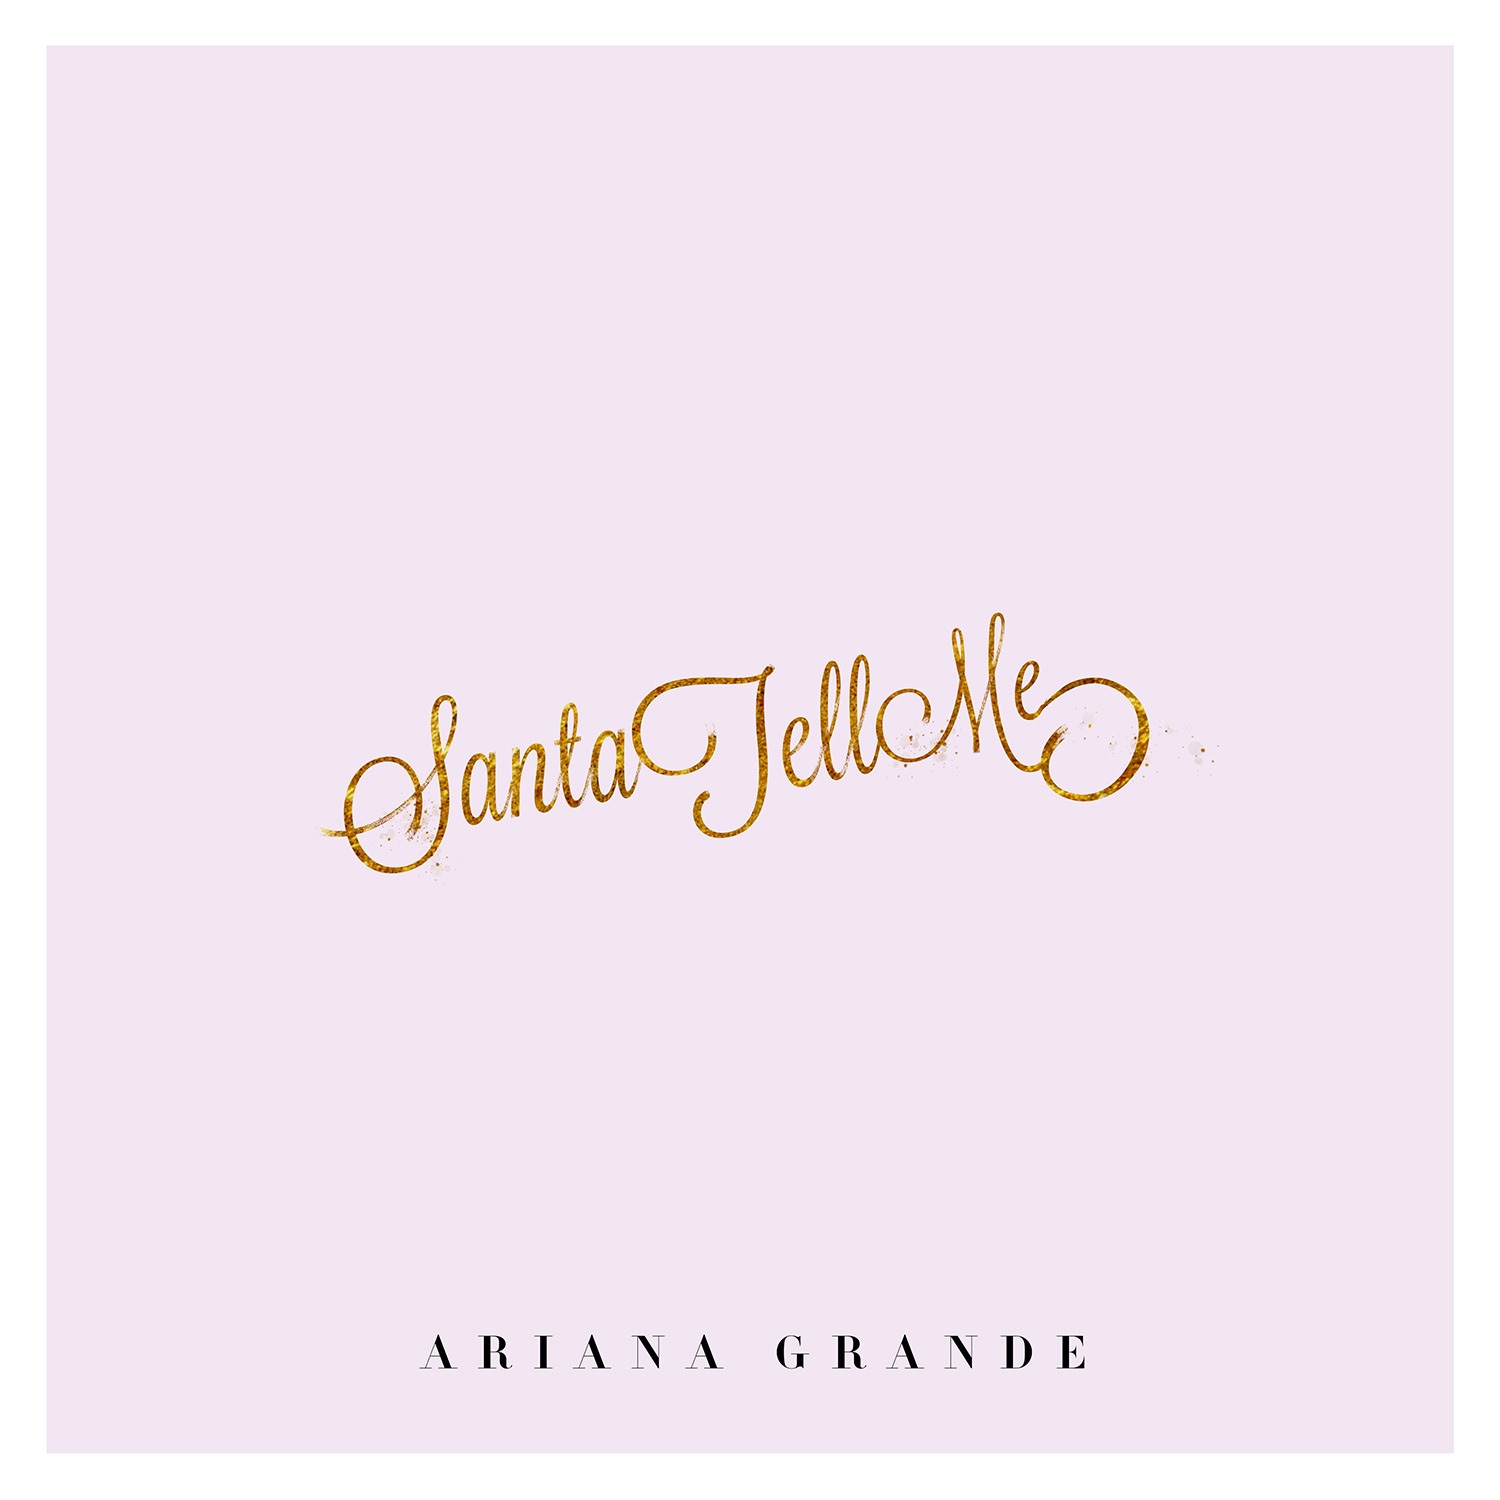 Ariana Grande - Santa Tell Me - Single